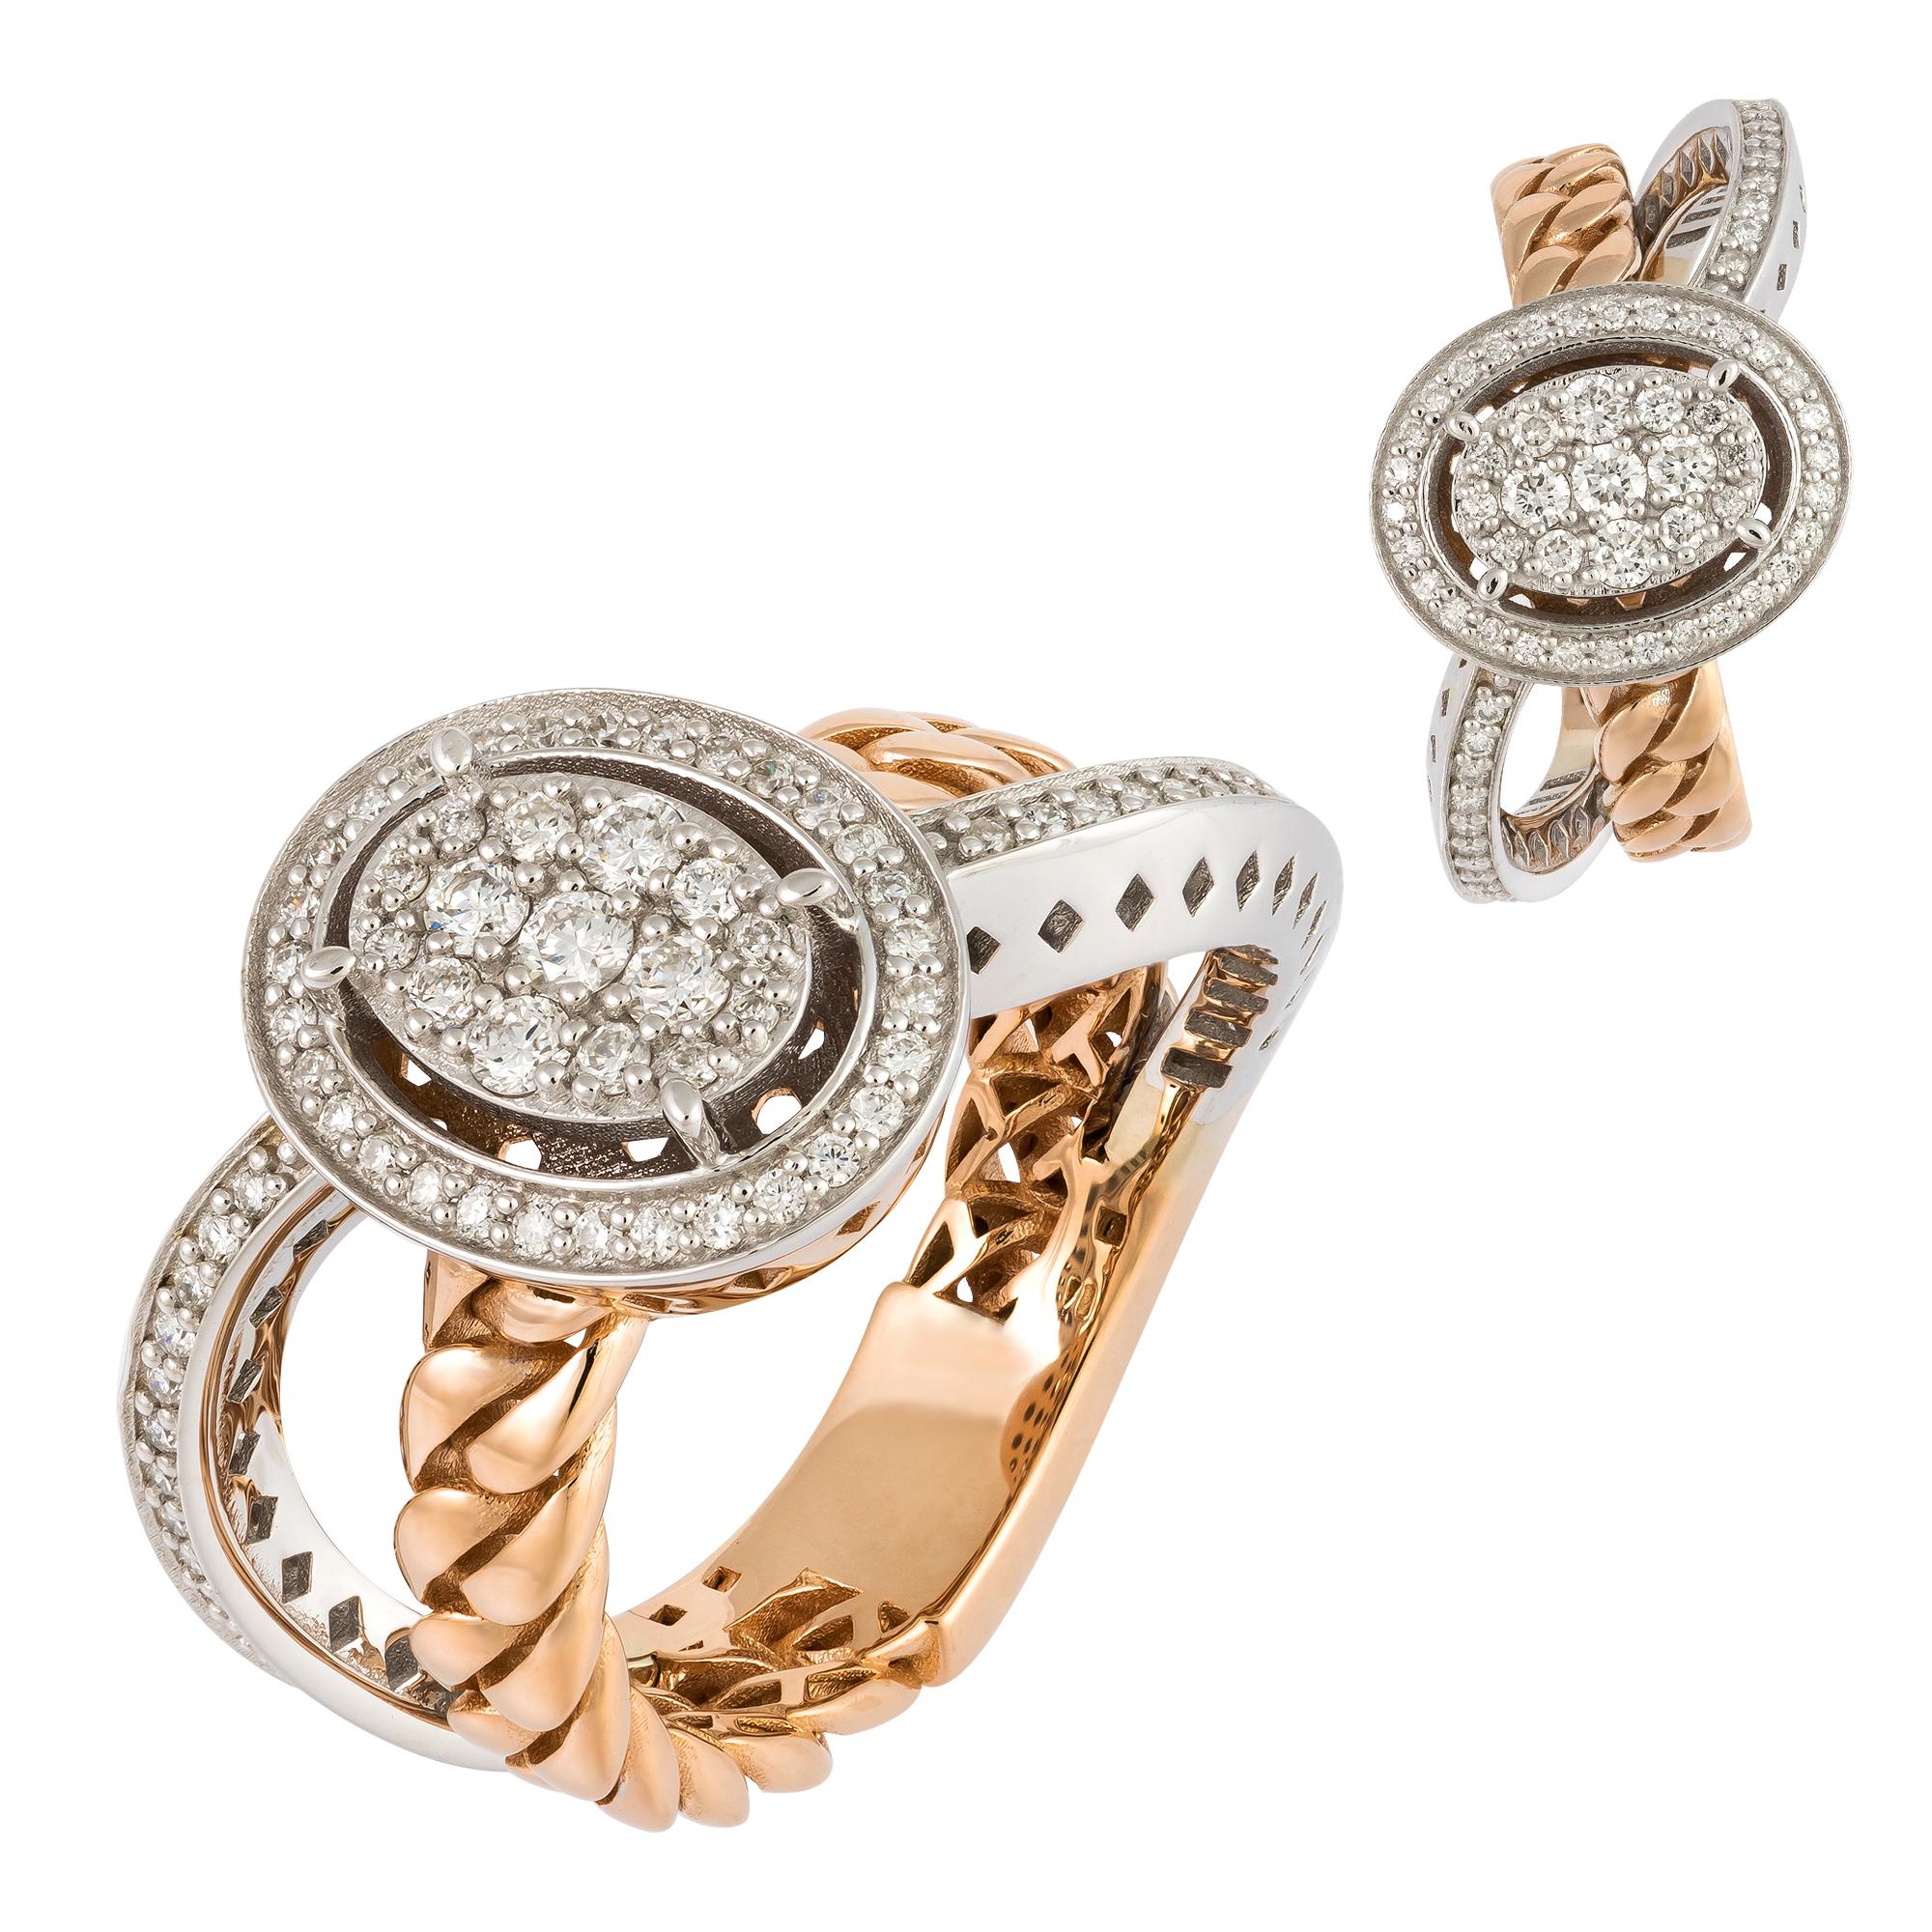 For Sale:  Stunning White Pink 18K Gold White Diamond Ring for Her 3